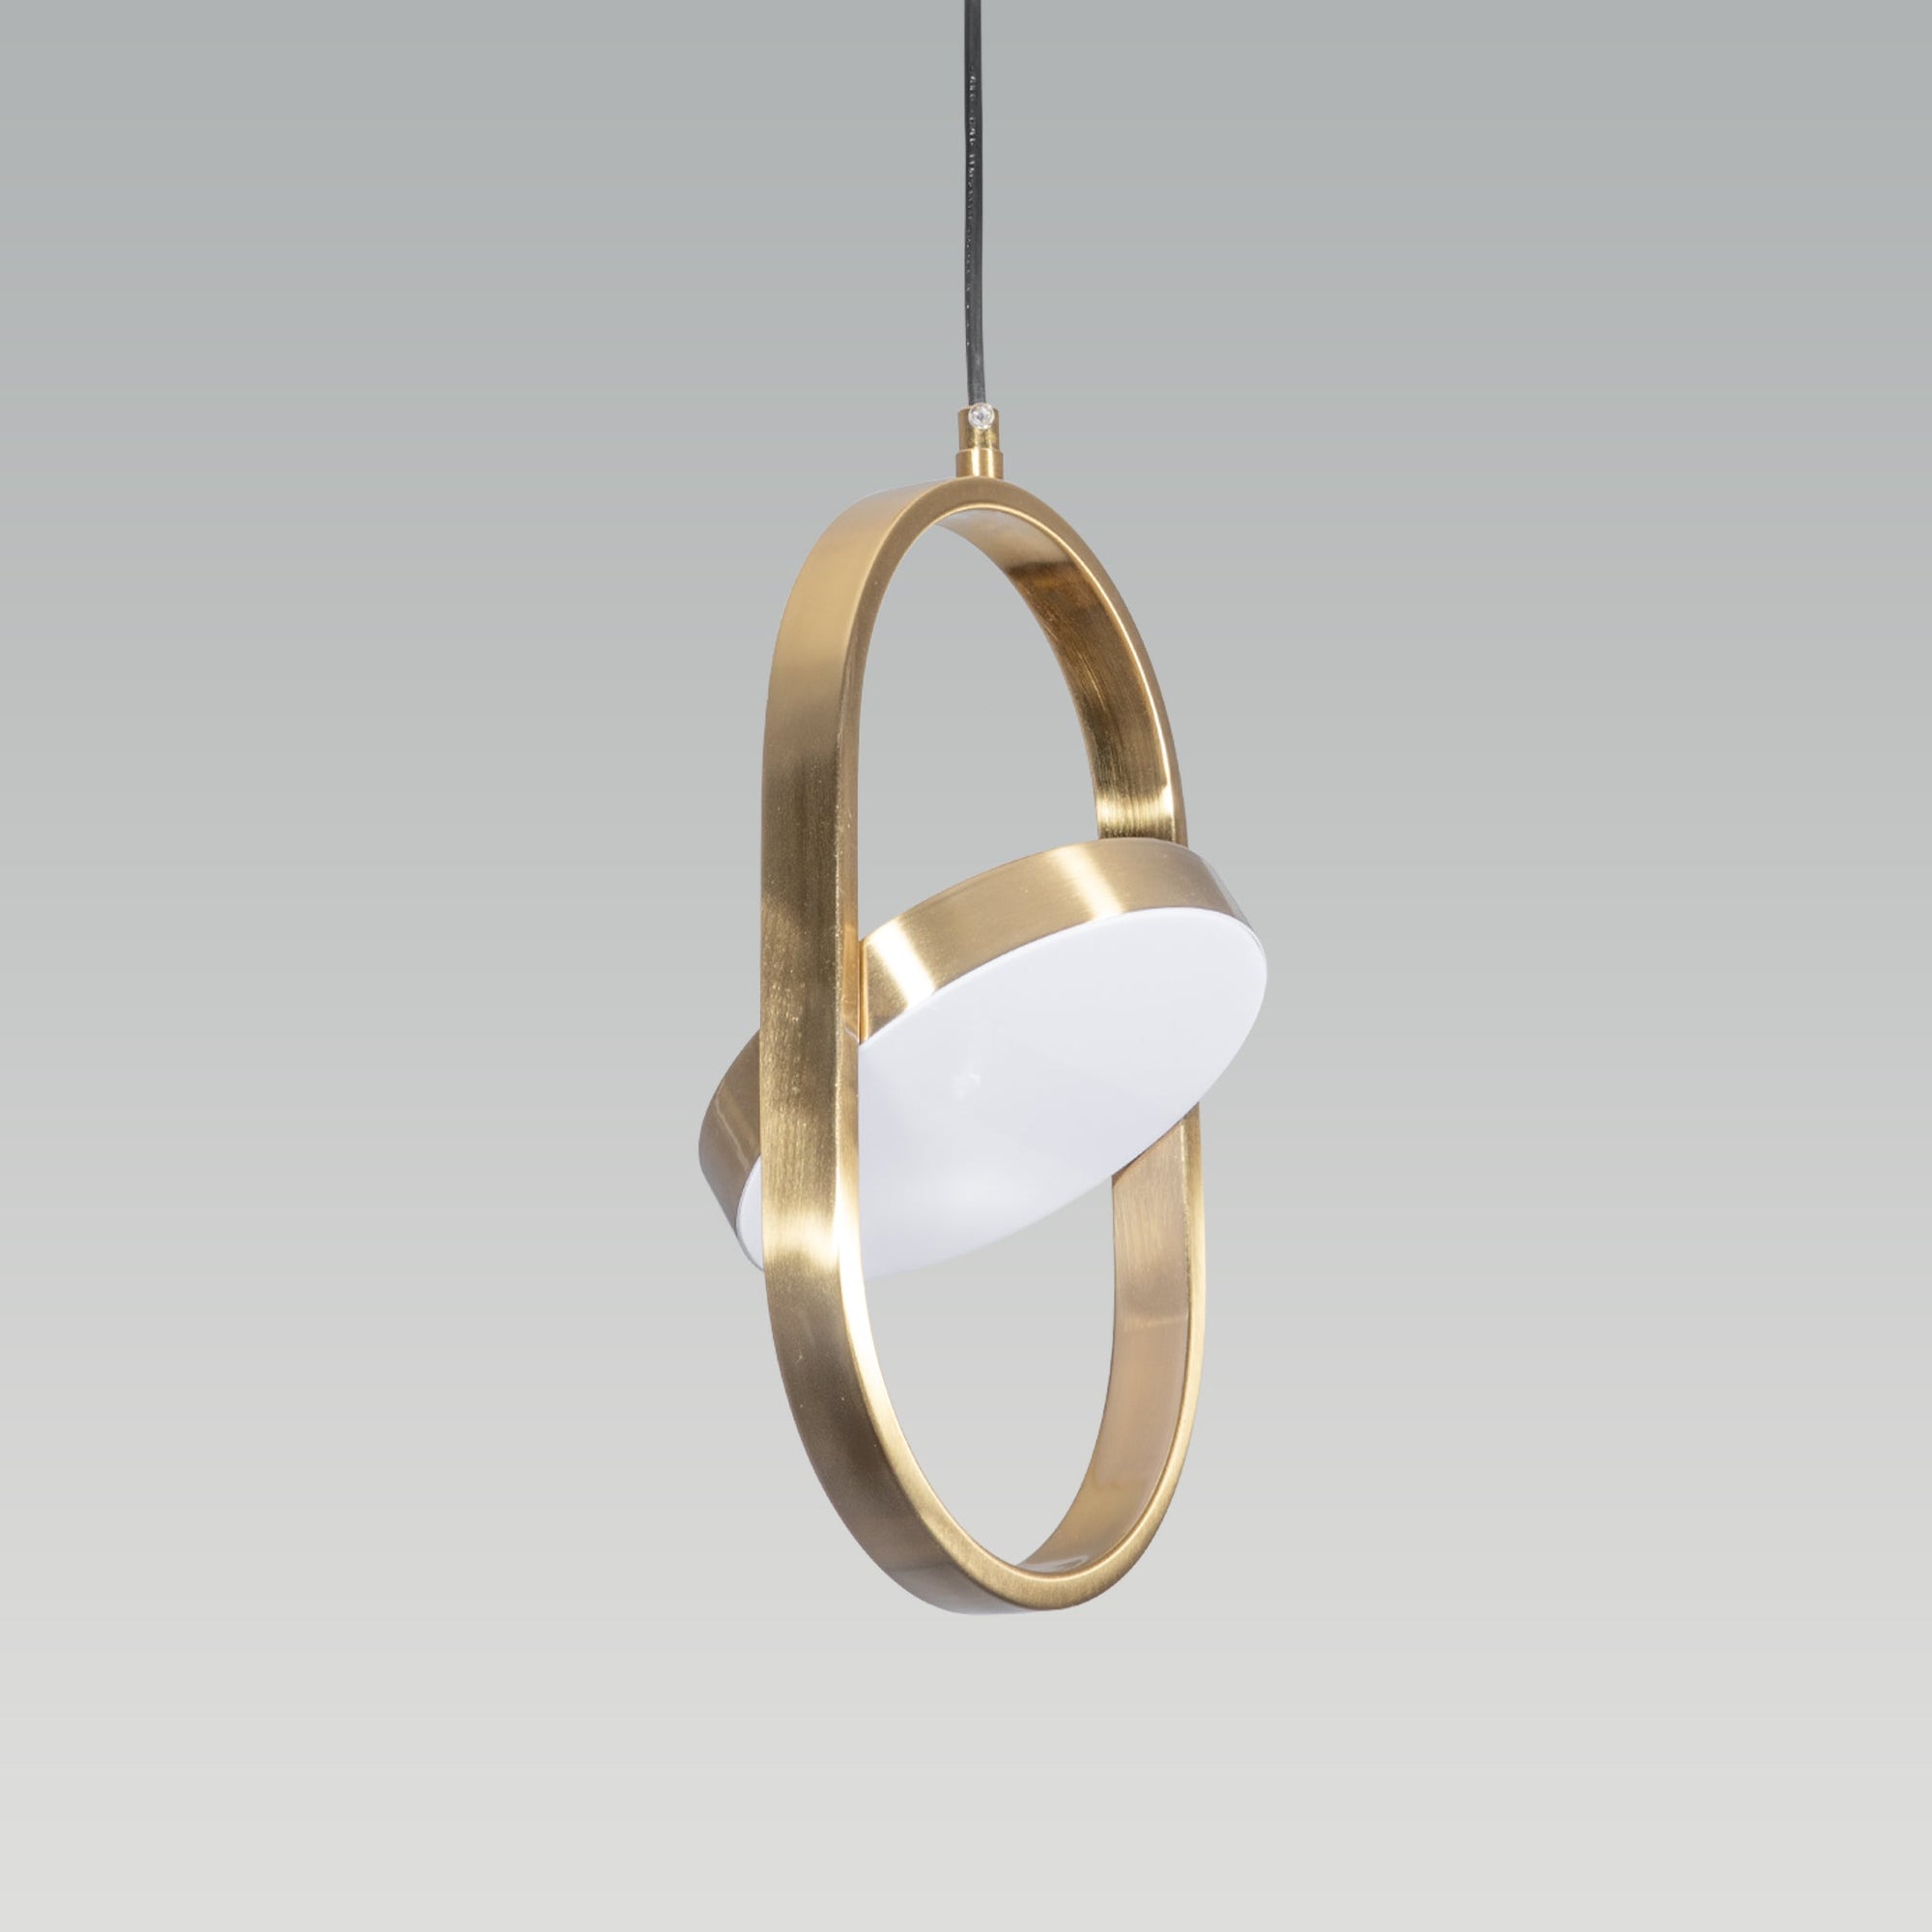 Shop Topline Brass LED Pendant Light online